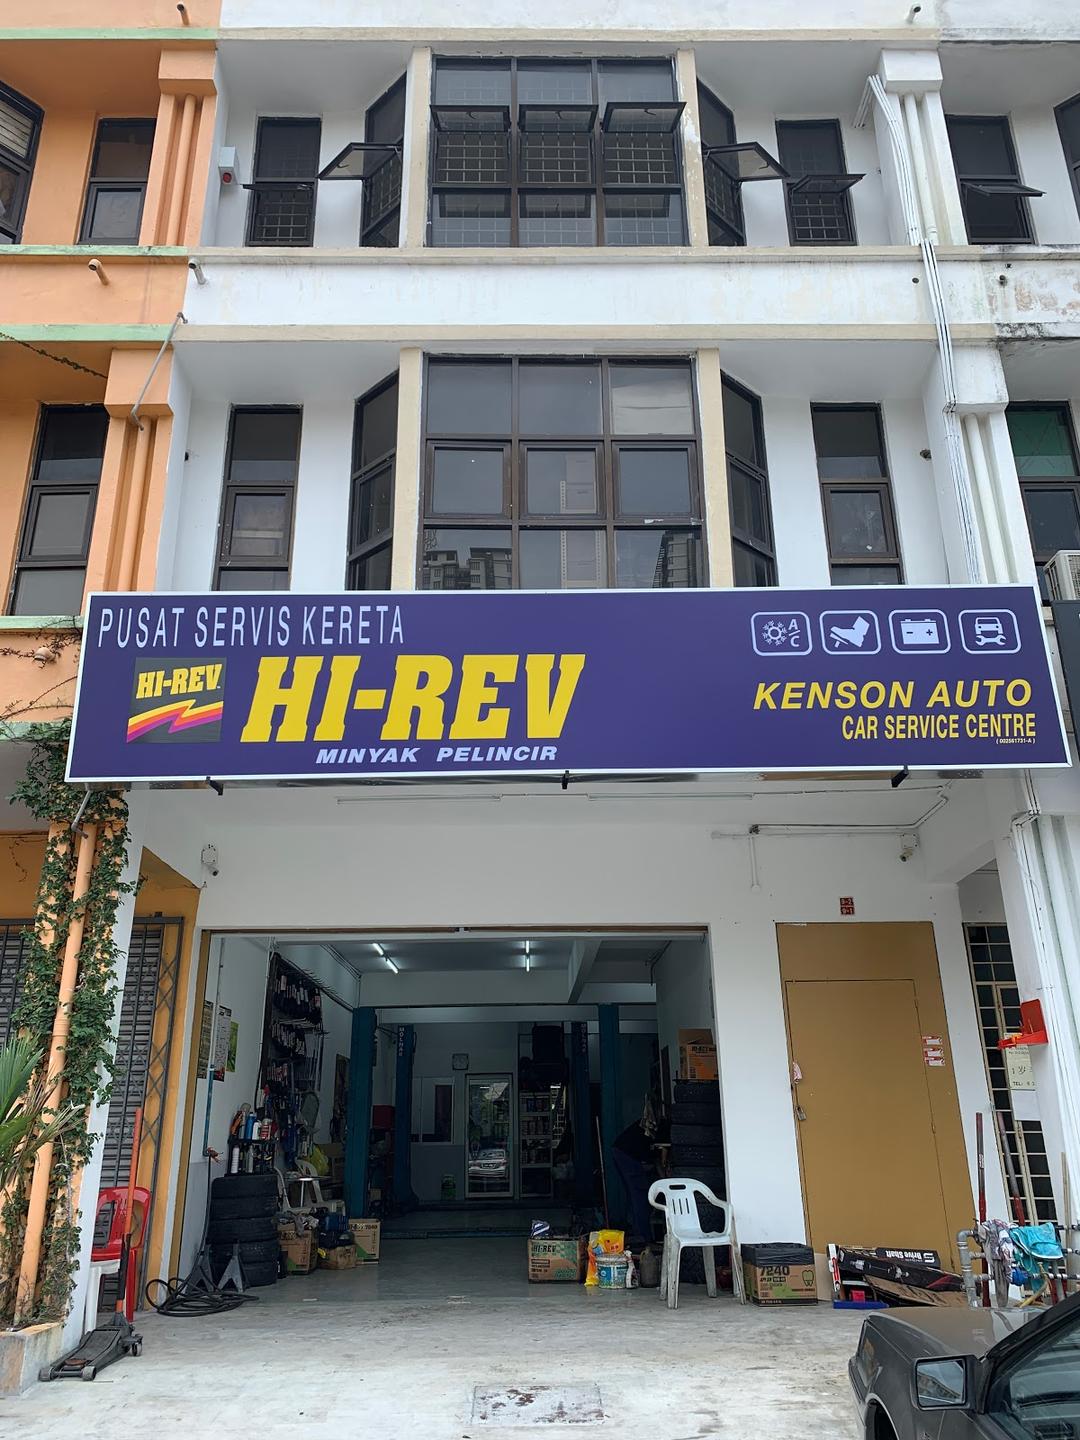 Photo of KENSON AUTO CAR SERVICE CENTRE - Kuala Lumpur, Kuala lumpur, Malaysia